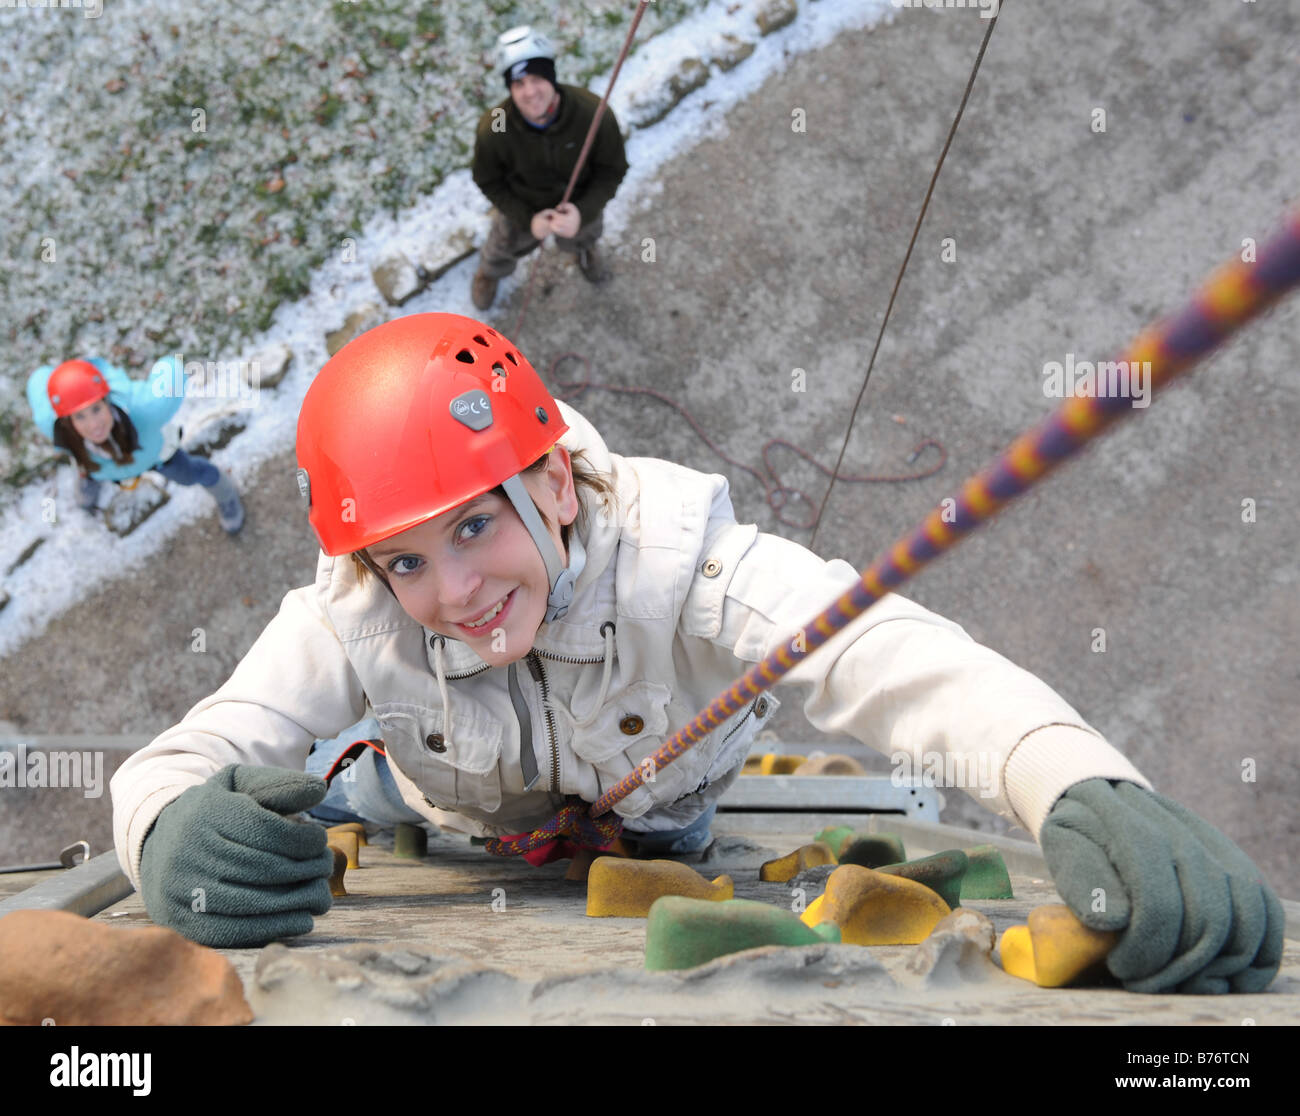 A female rock climber climbing on an artificial climbing wall. Stock Photo